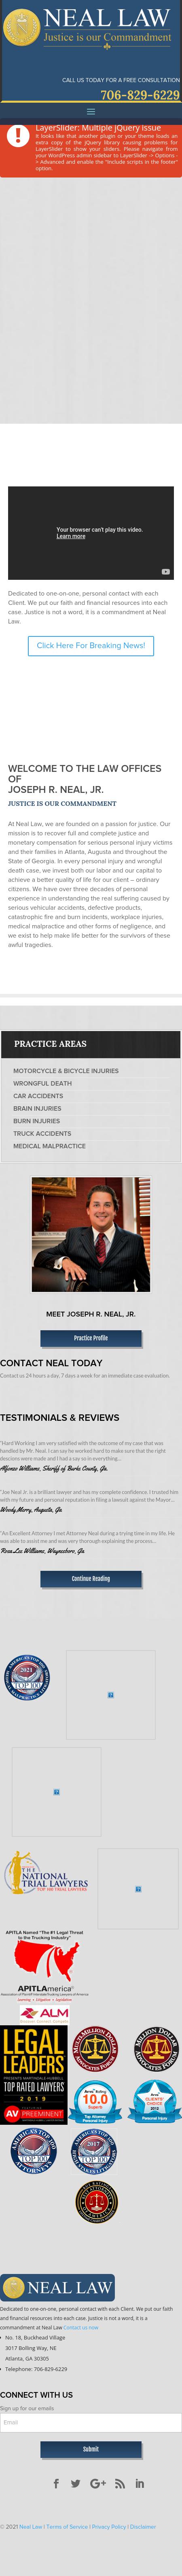 Neal Law - Atlanta GA Lawyers